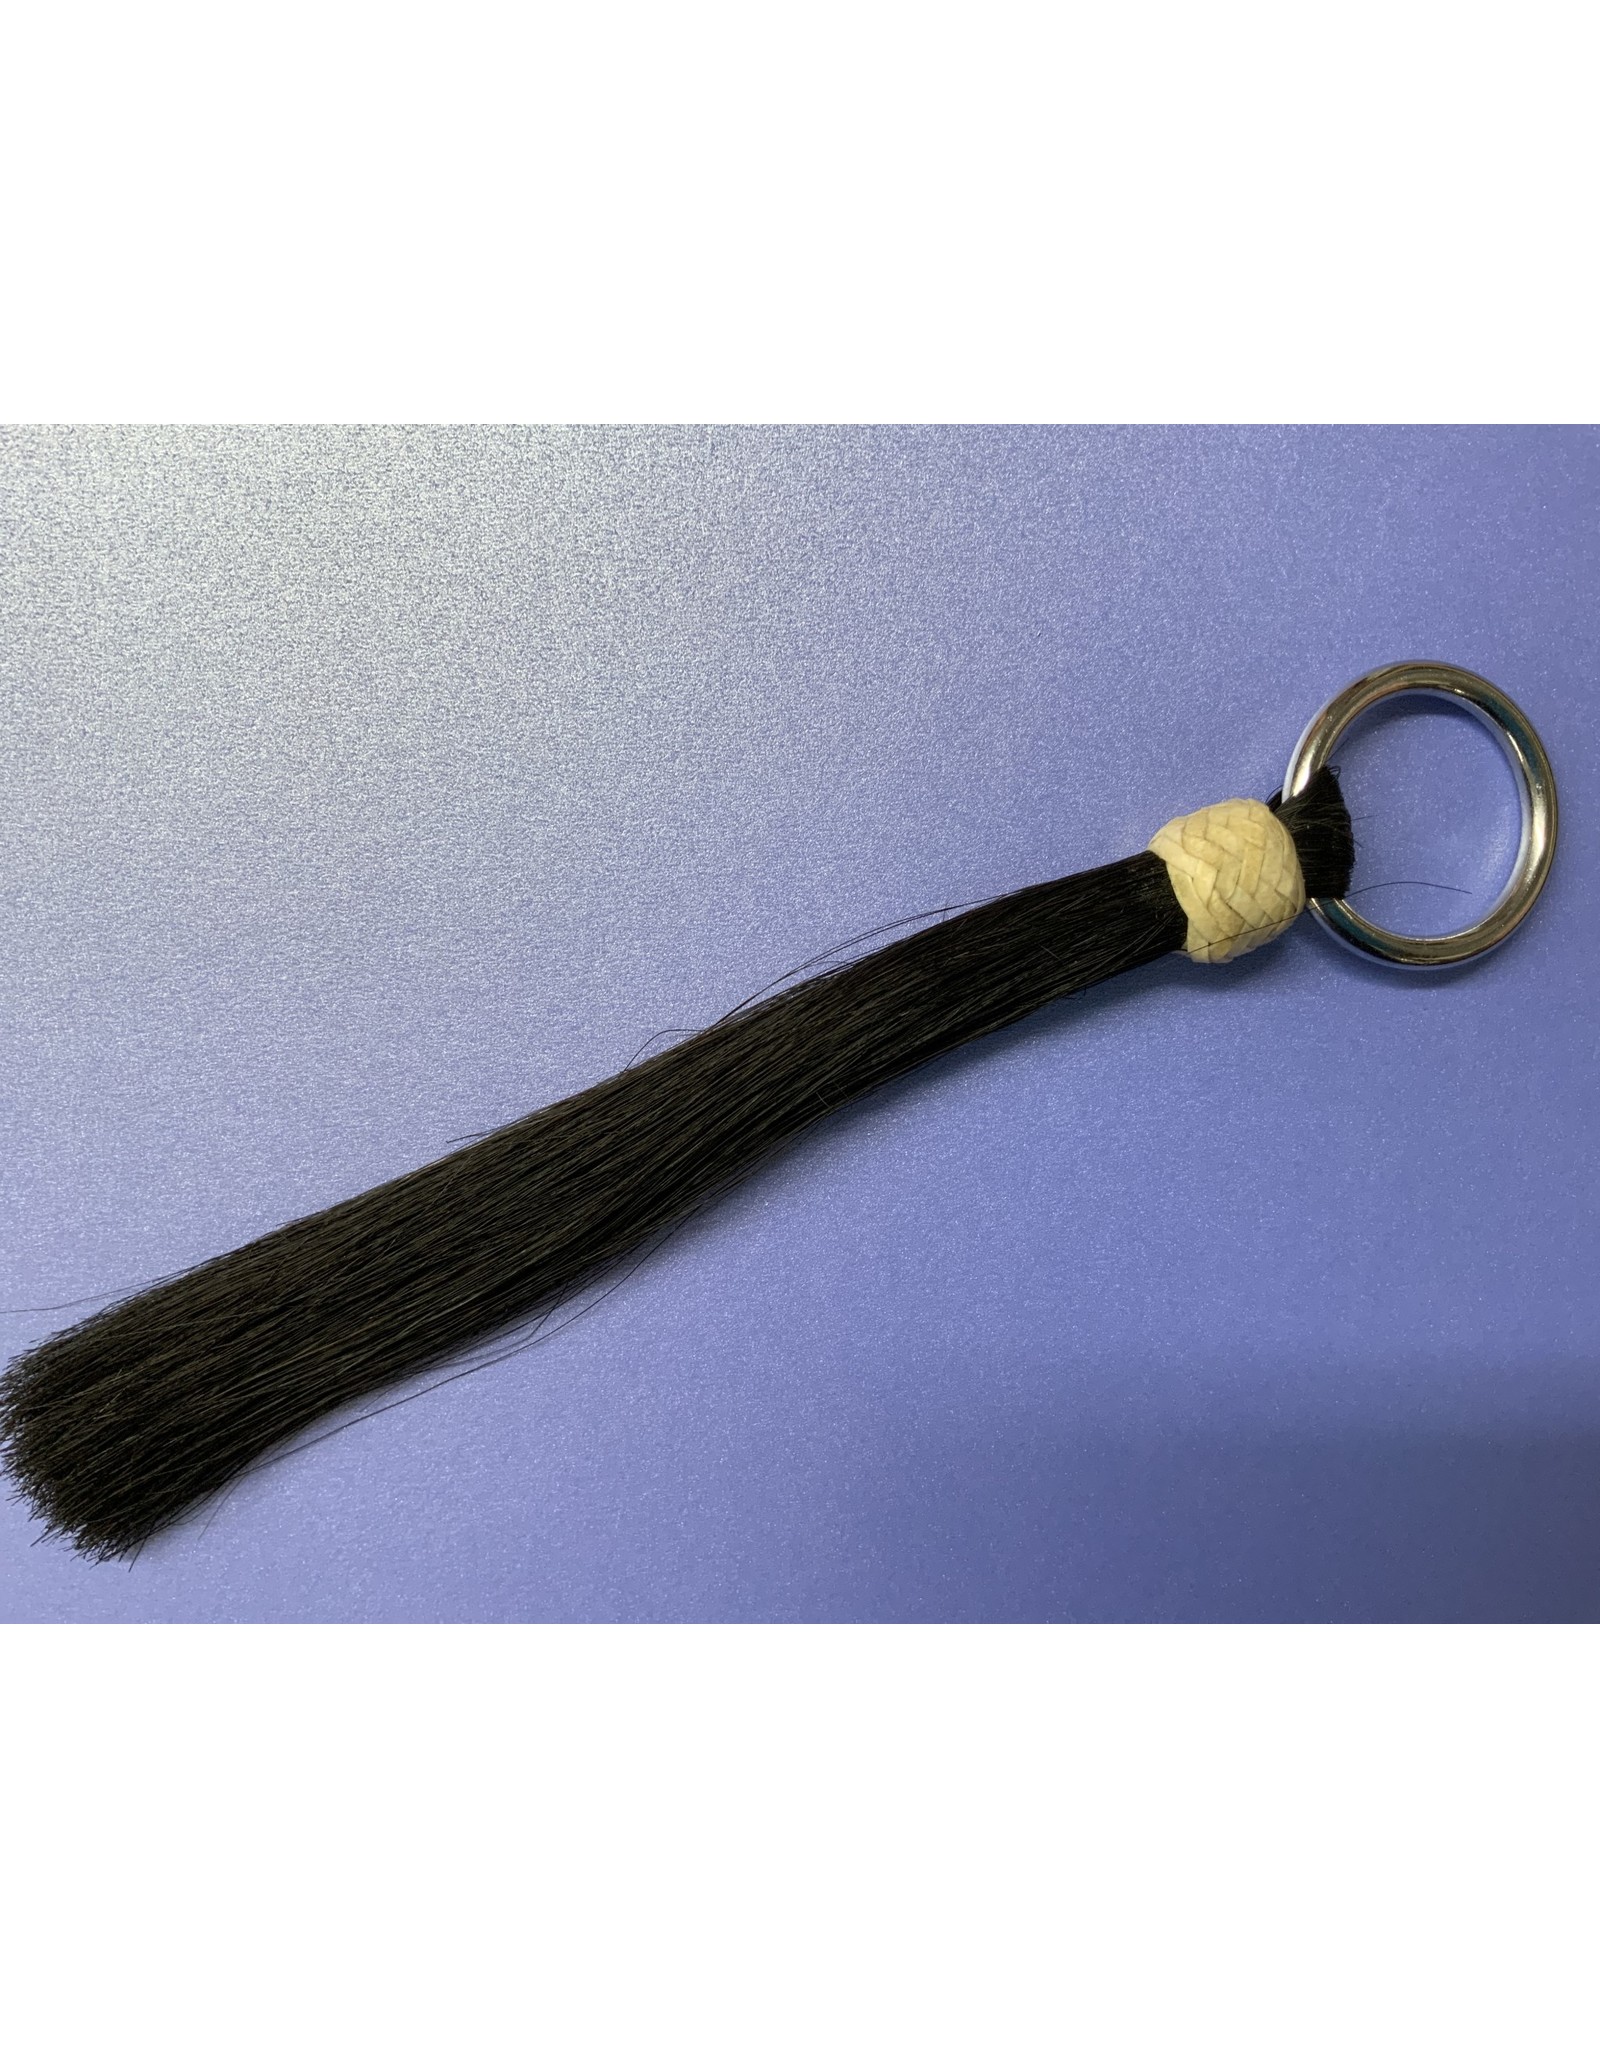 Horse Hair Tassel W/Ring 6" 45-313-2-0